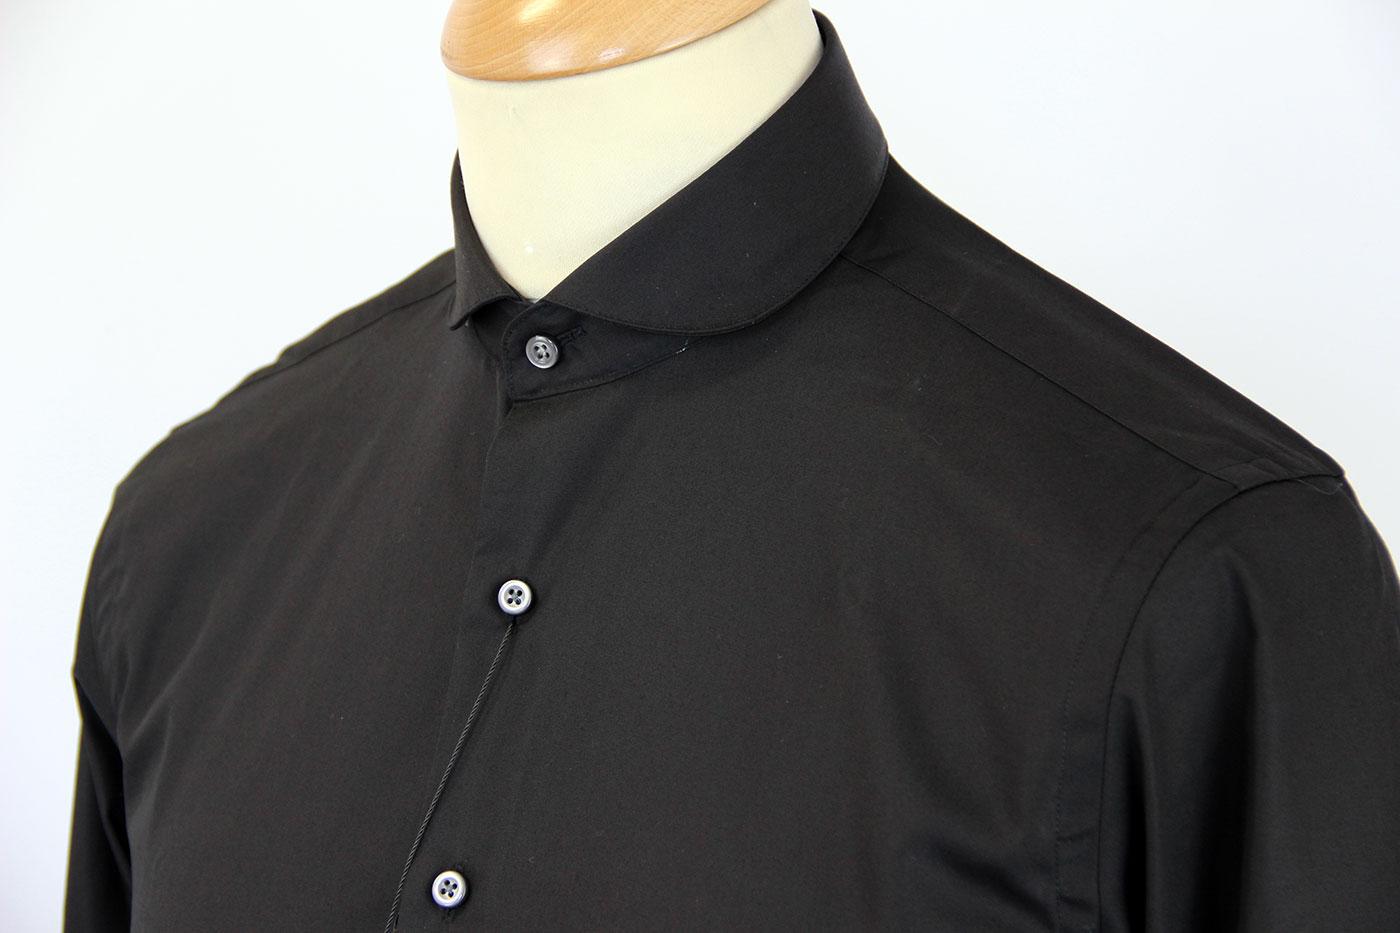 Ben Sherman Tailoring Retro 60s Mod Smart Penny Collar Shirt